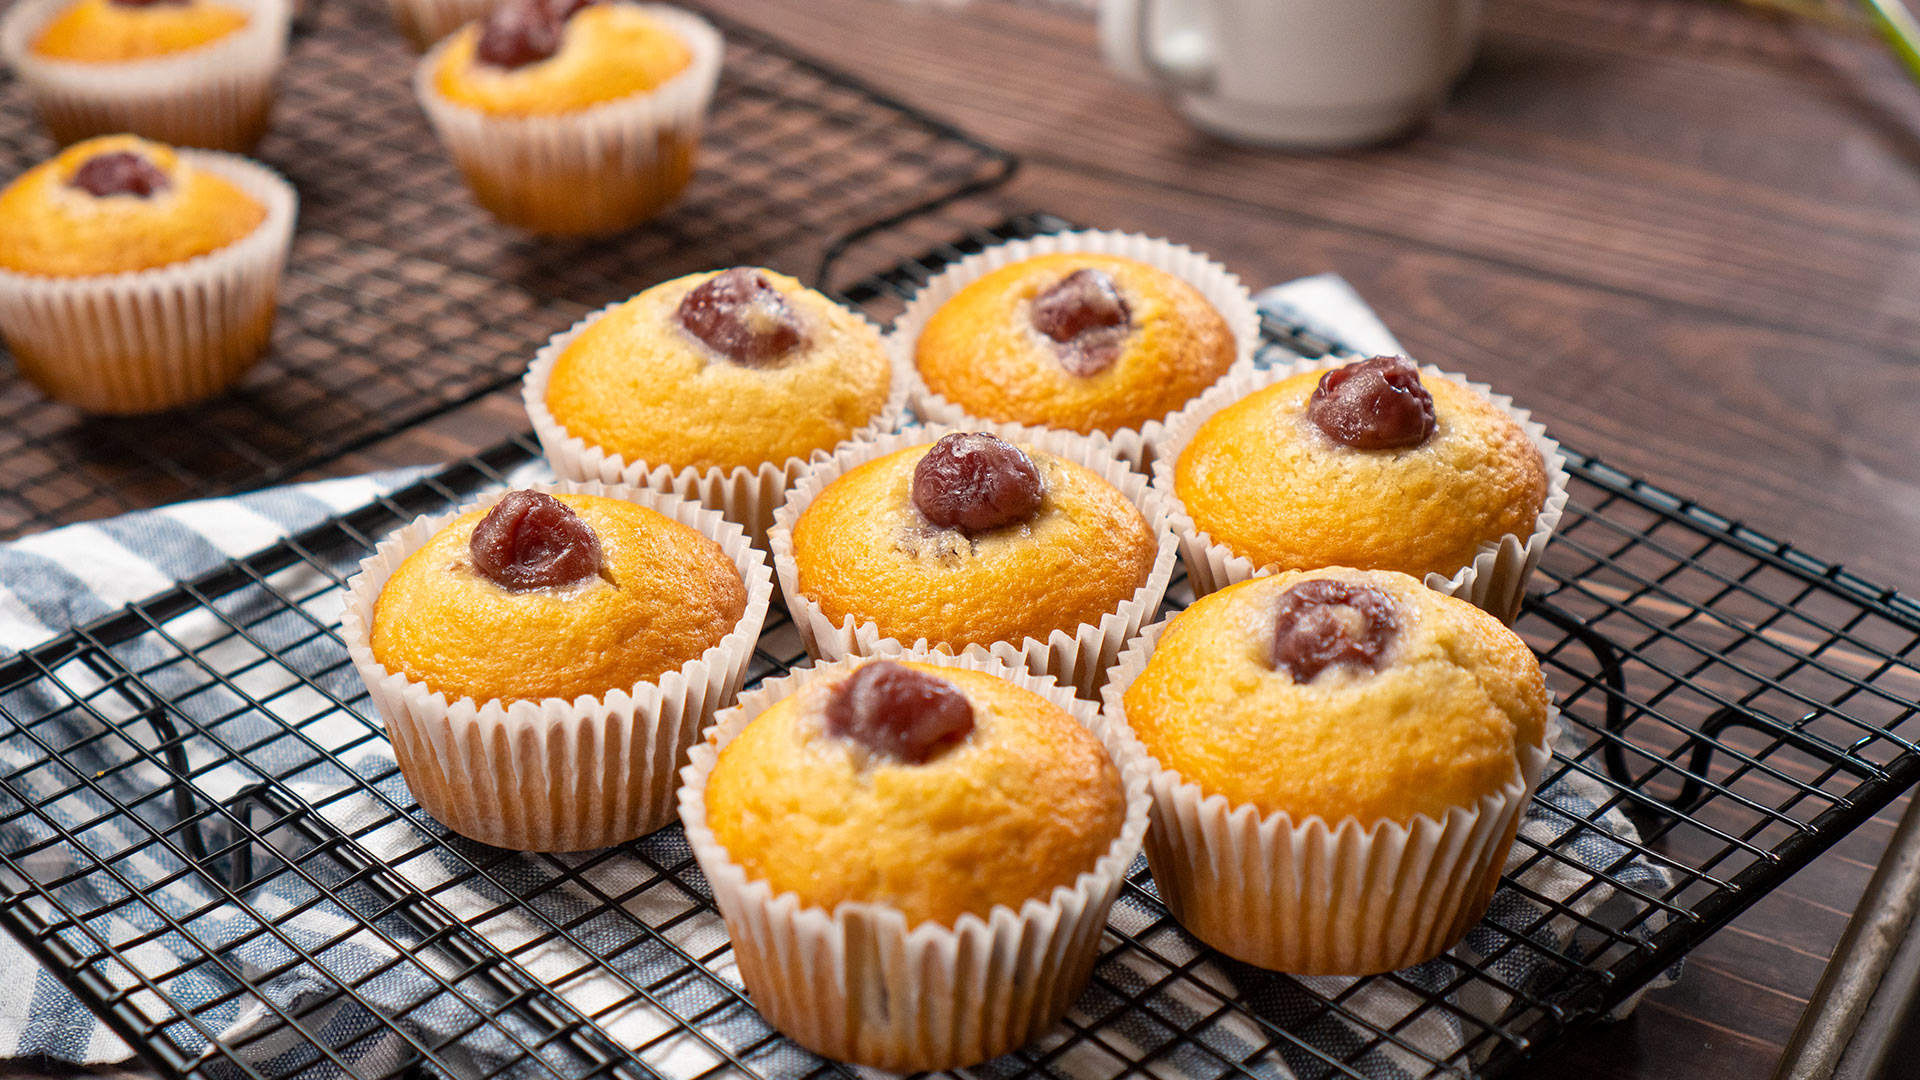 Lemon Pound Cake Muffins Recipe: How to Make It